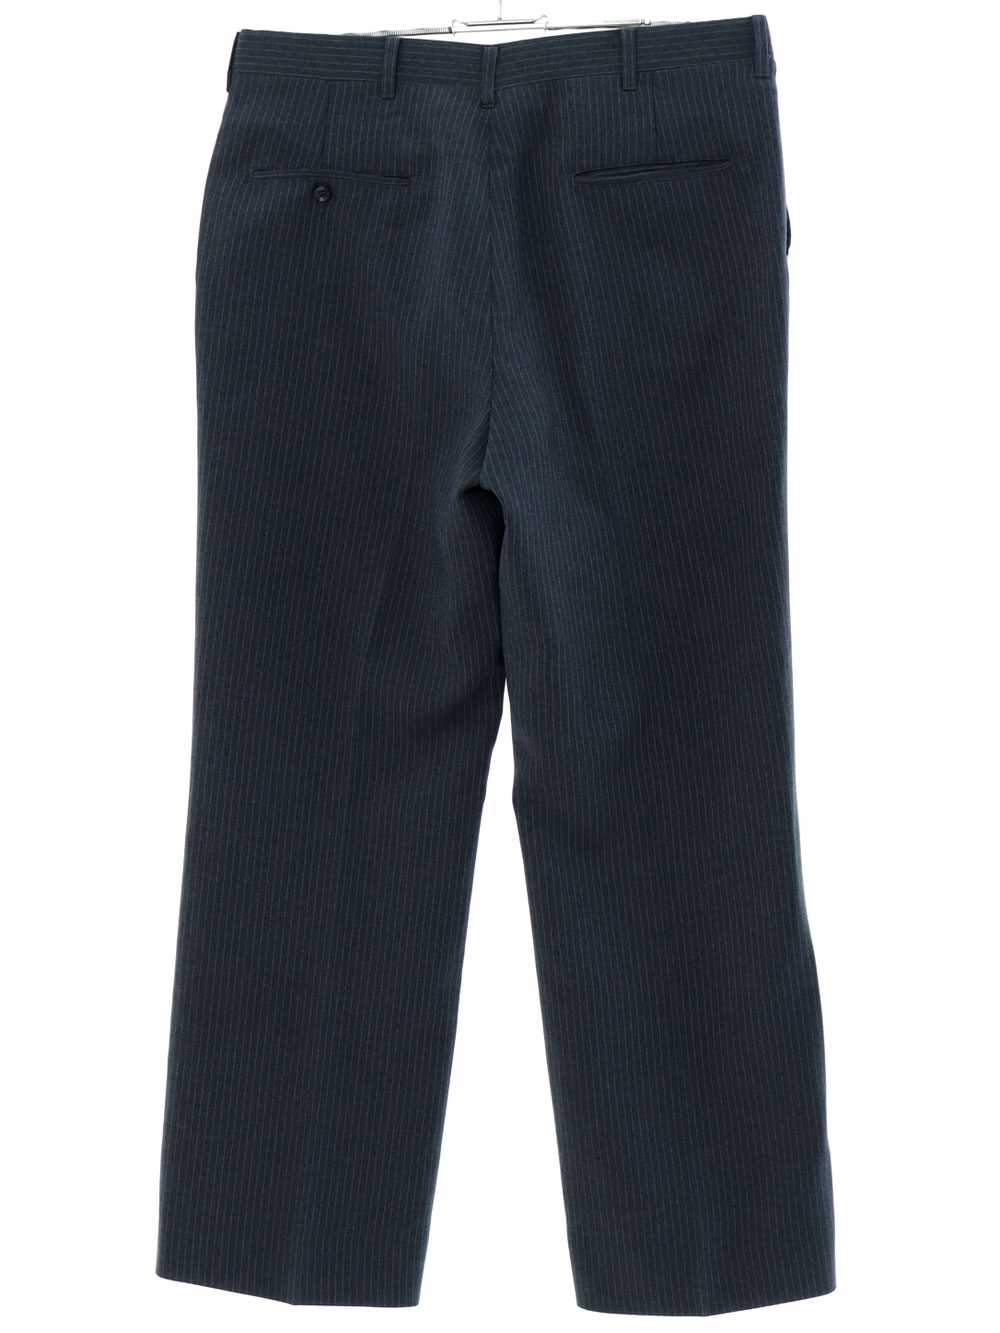 1990's Mens Pinstriped Flat Front Slacks Pants - image 3